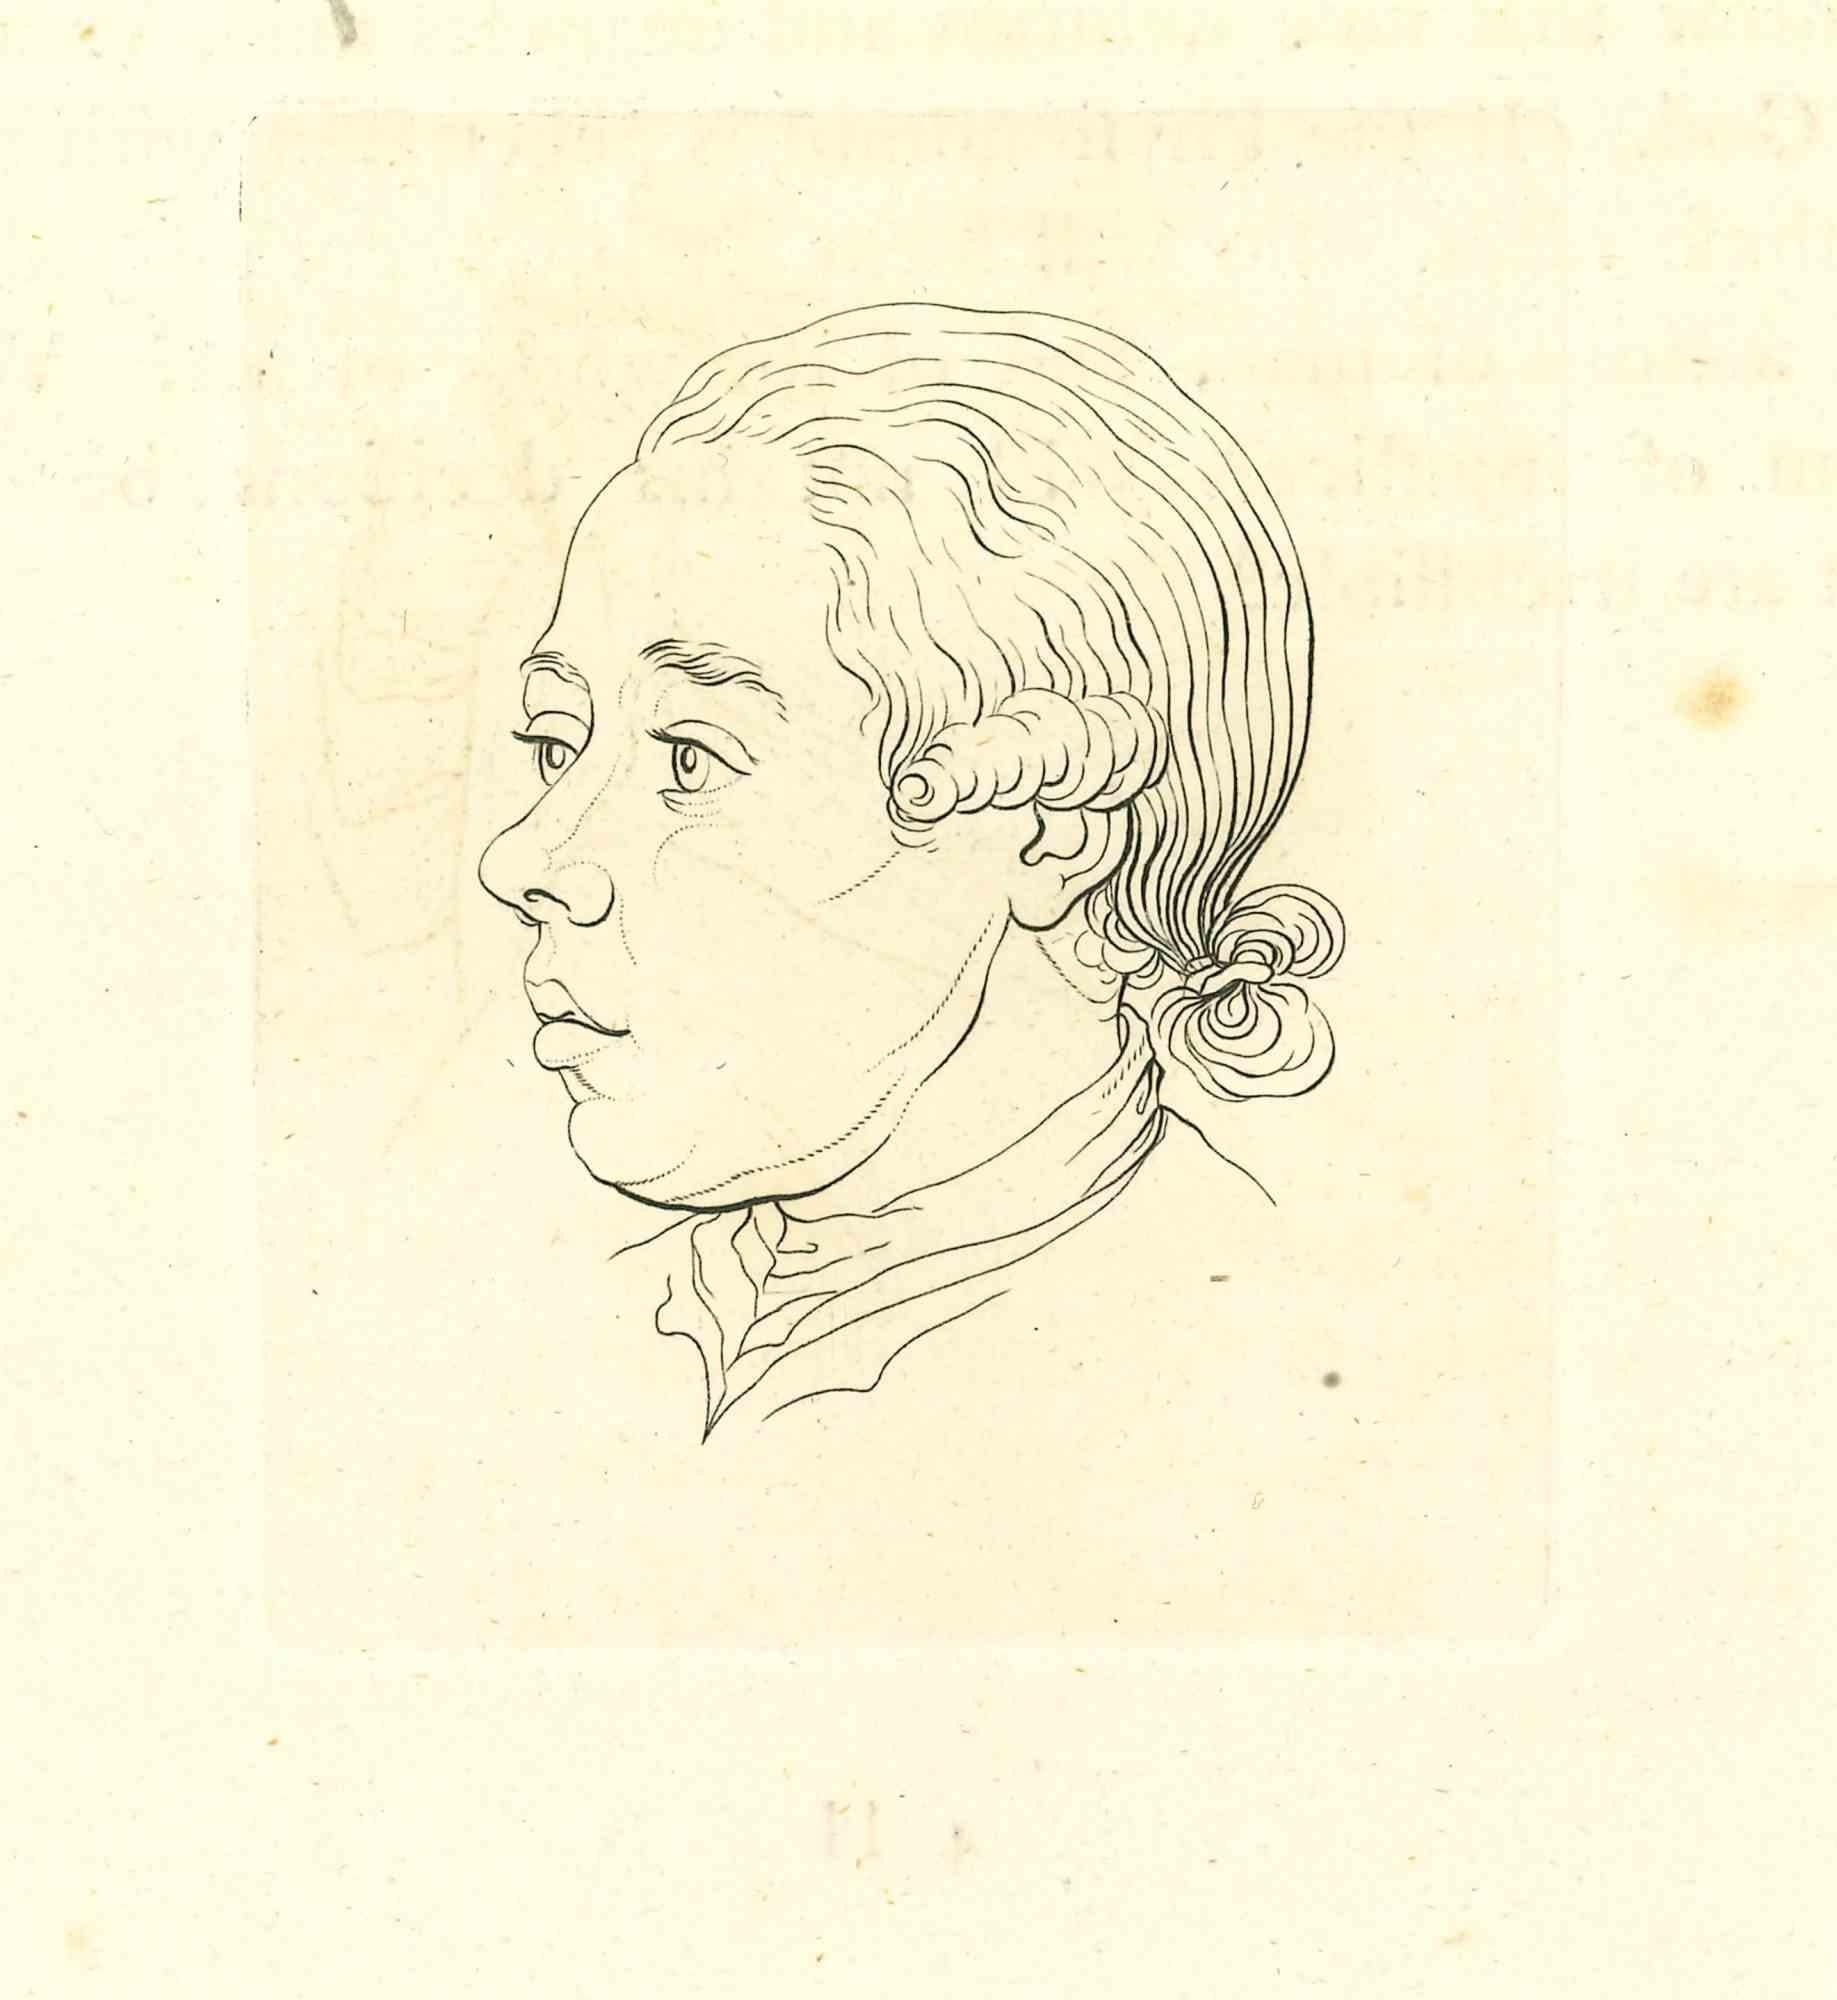 Portrait - Original Etching by Thomas Holloway - 1810